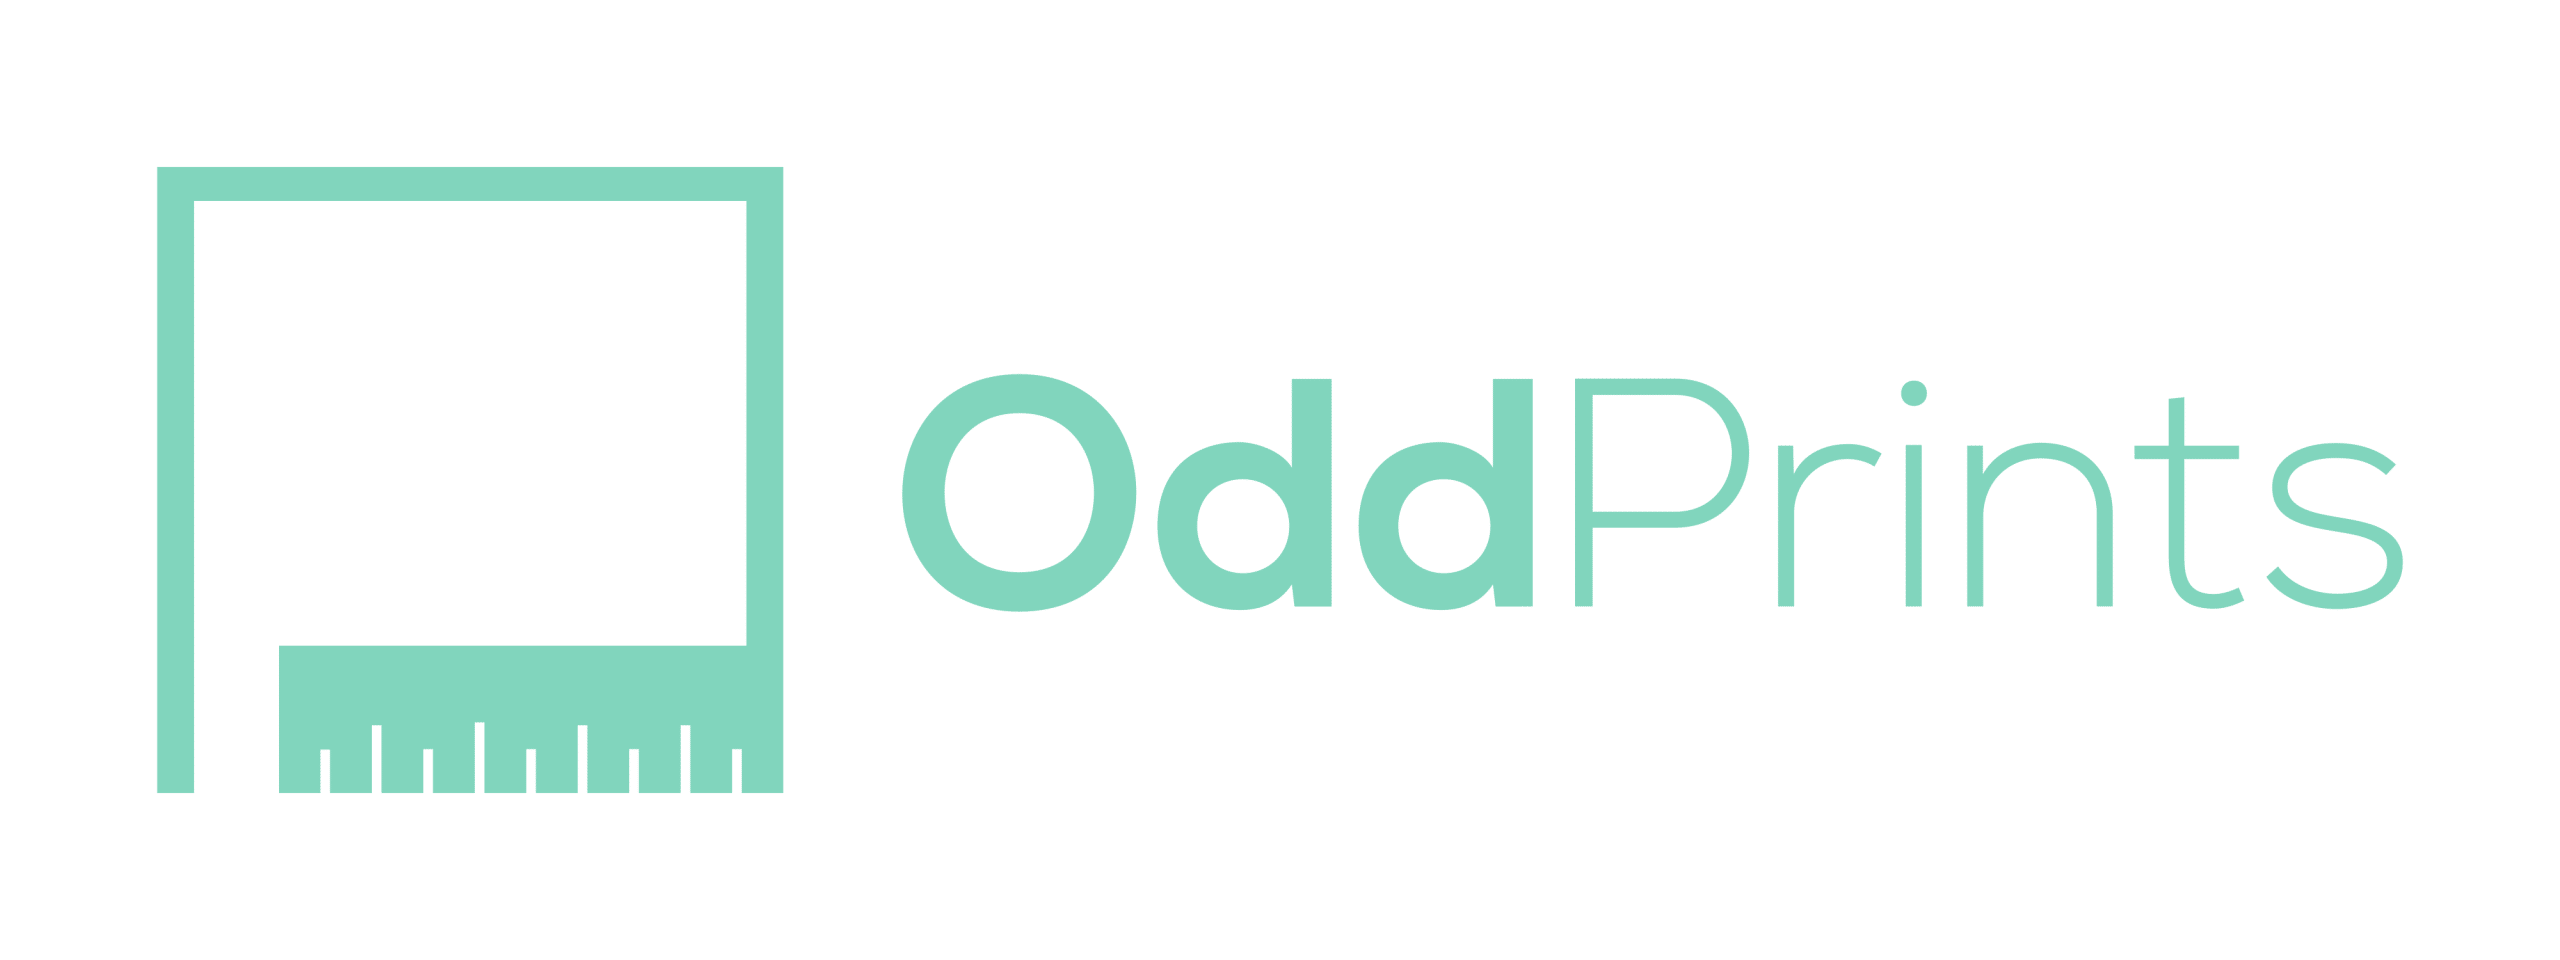 Oddprints logo